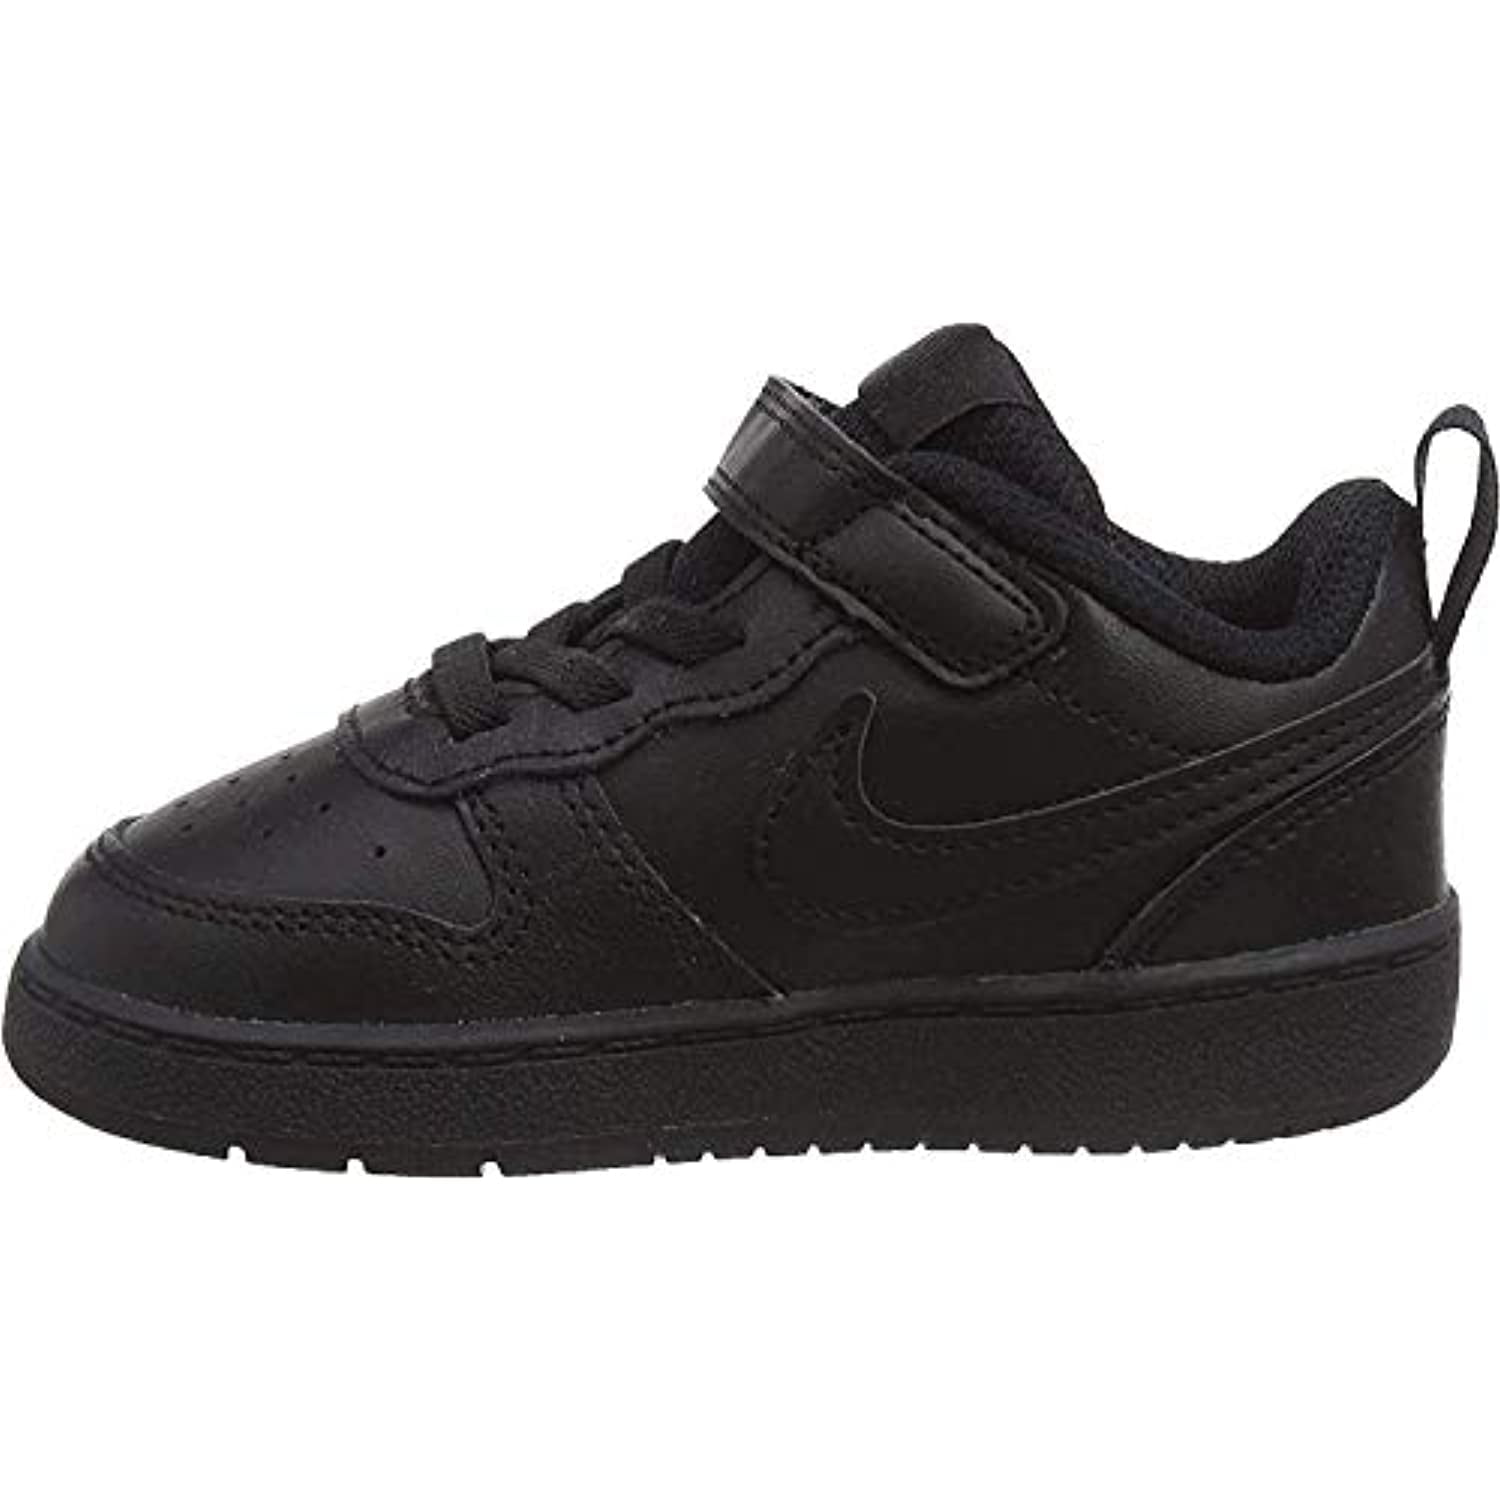 Nike Court Borough Size 9 Low 2 Black/Black/Black Toddler (TDV) Bq5453-001